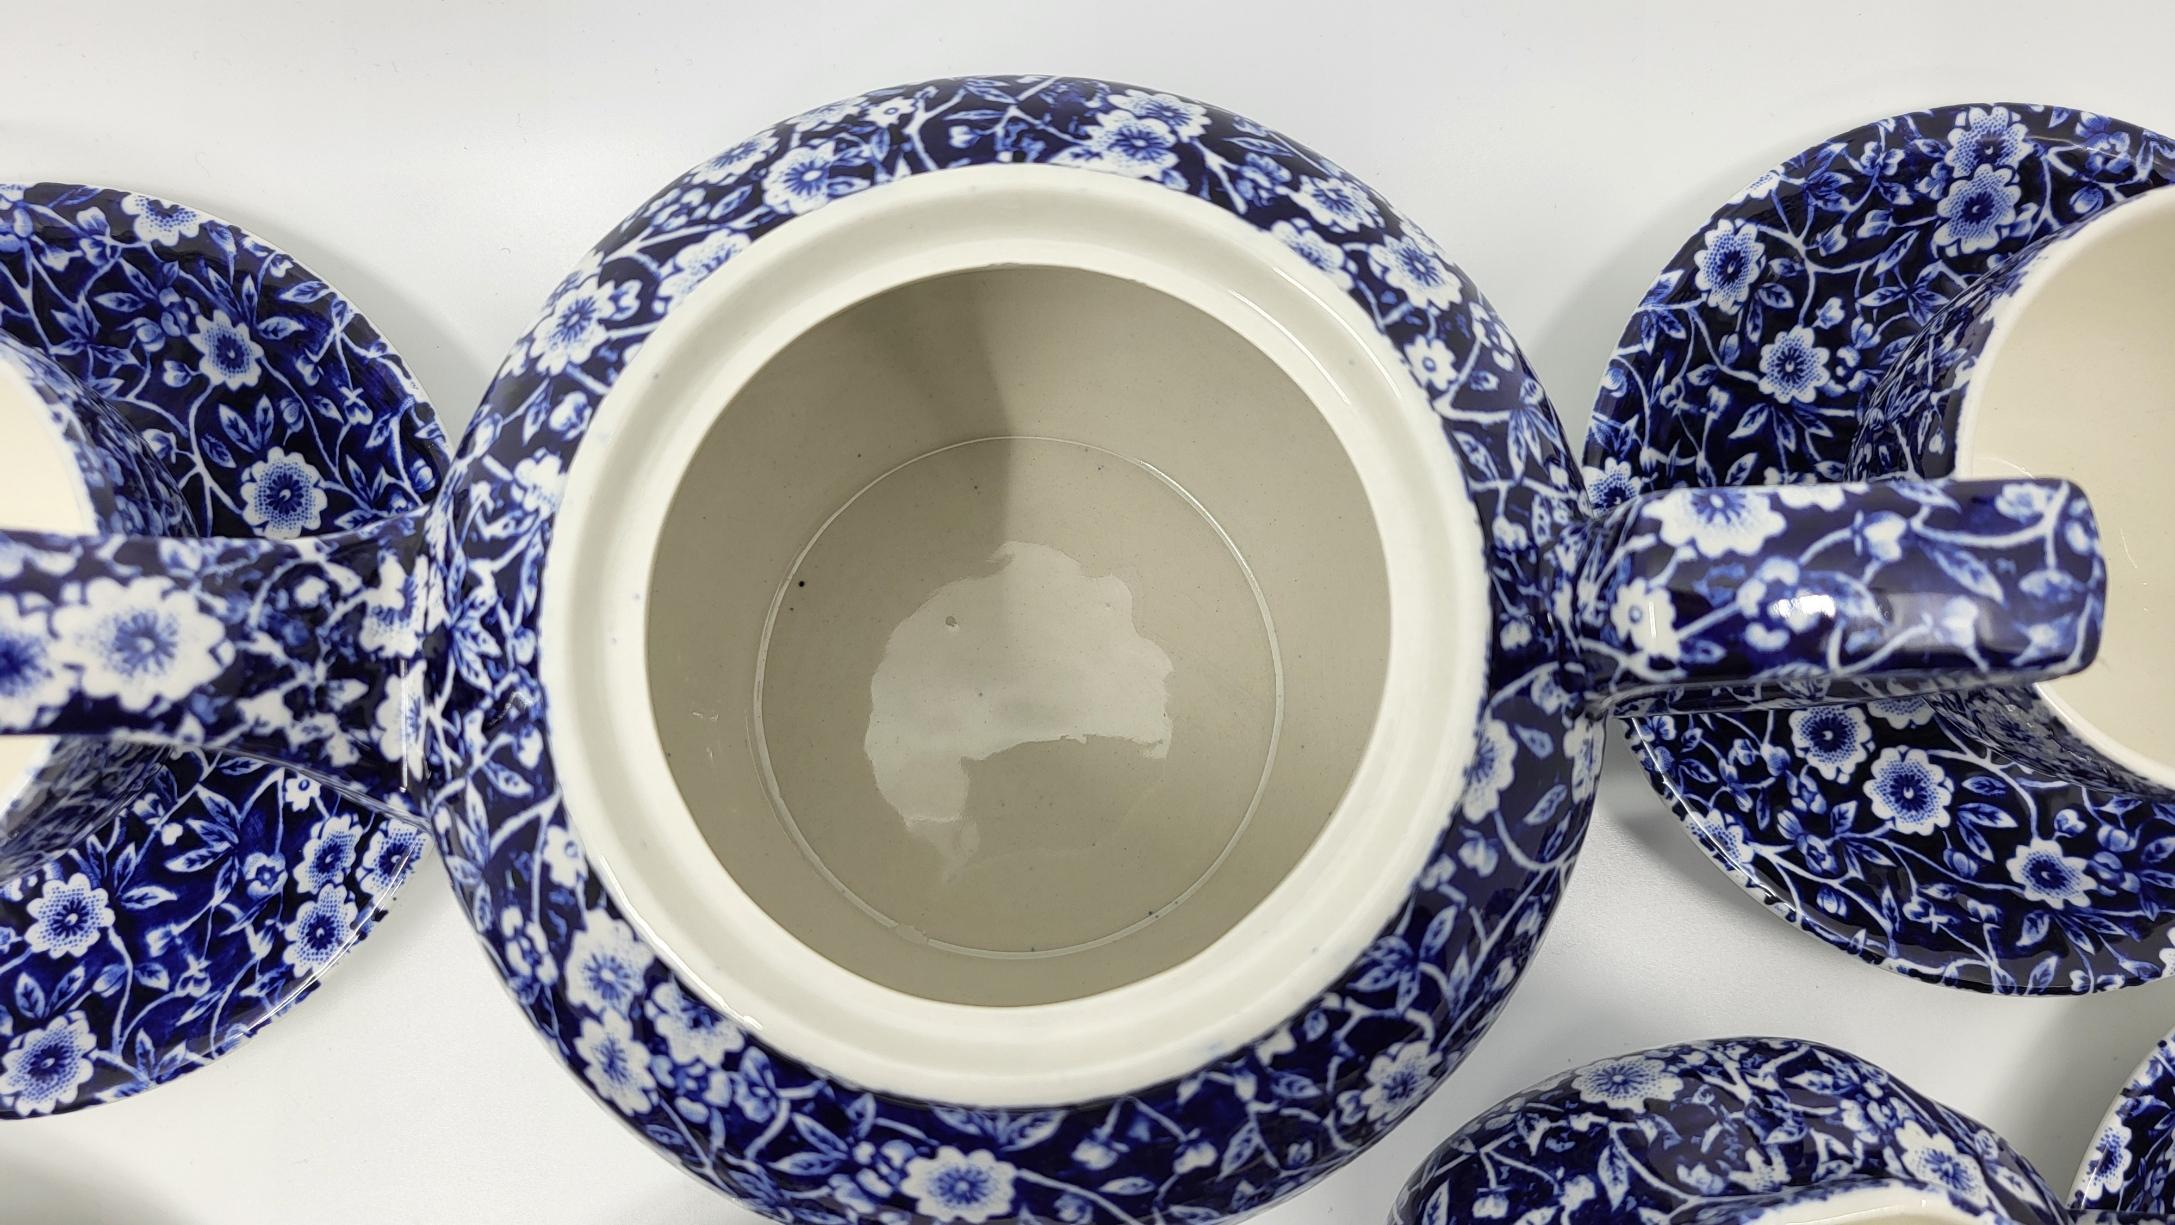 Ceramic Service à thé Calico  Burleigh Staffordshire England décor fleurs bleues 20th